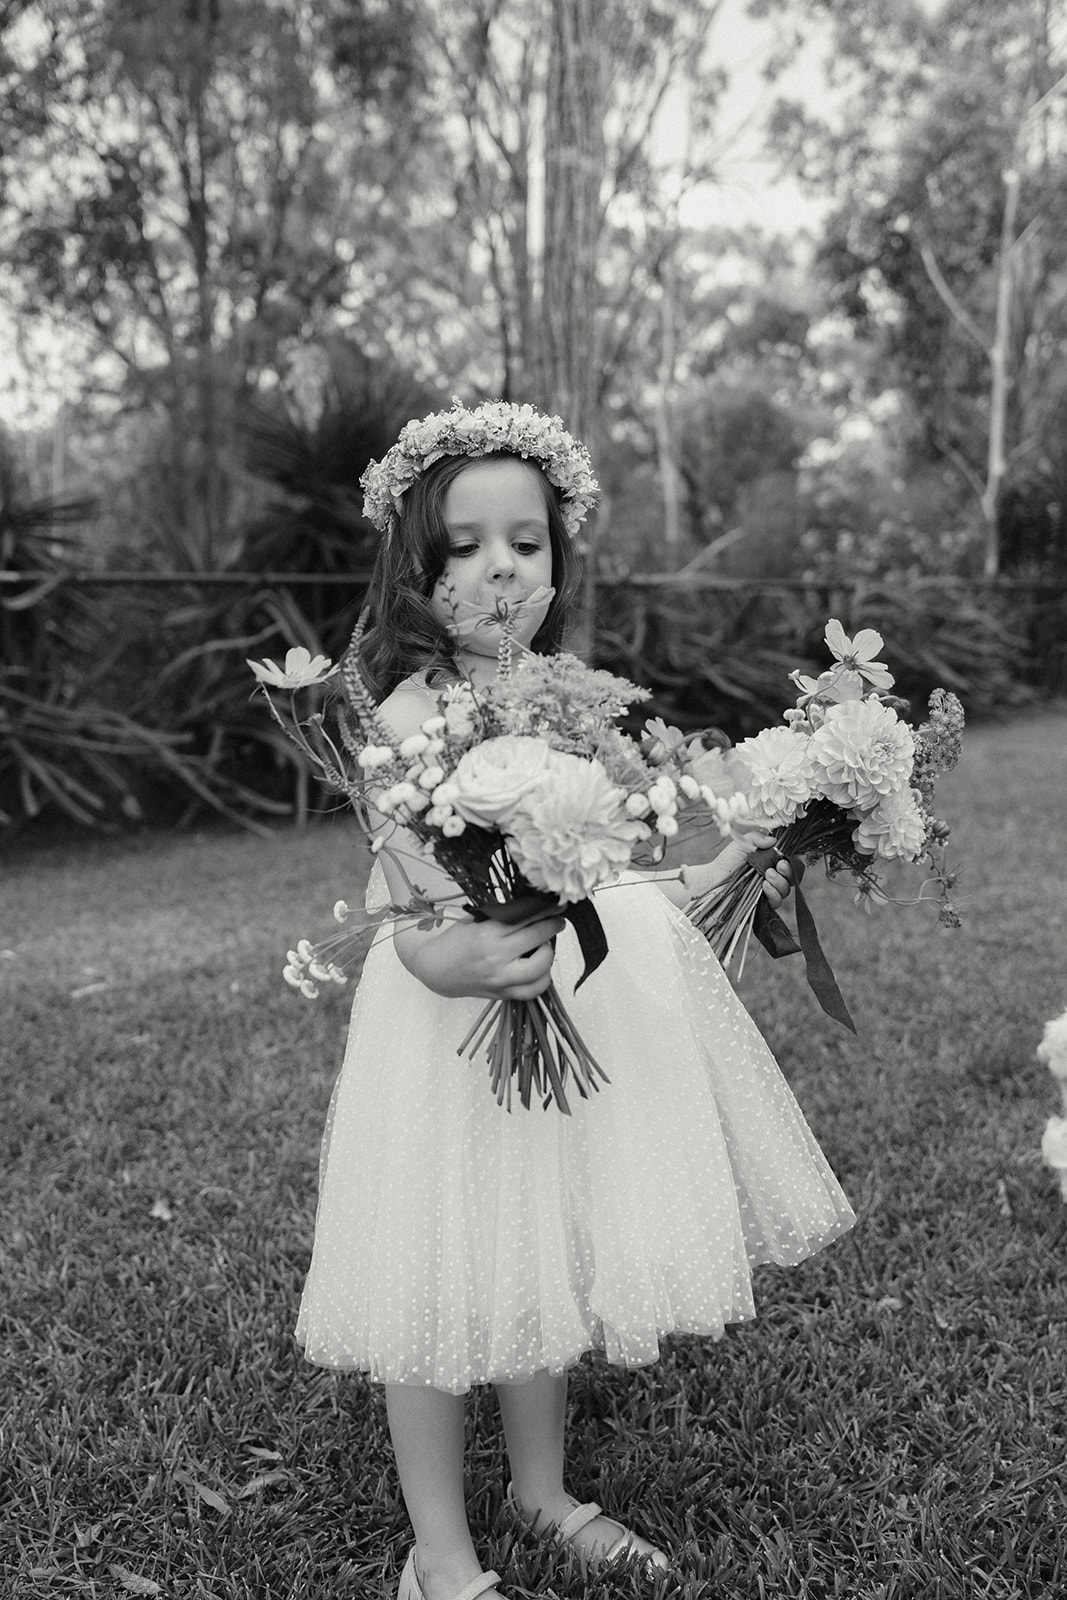 Brisbane editorial backyard wedding photography, Junior bridesmaid